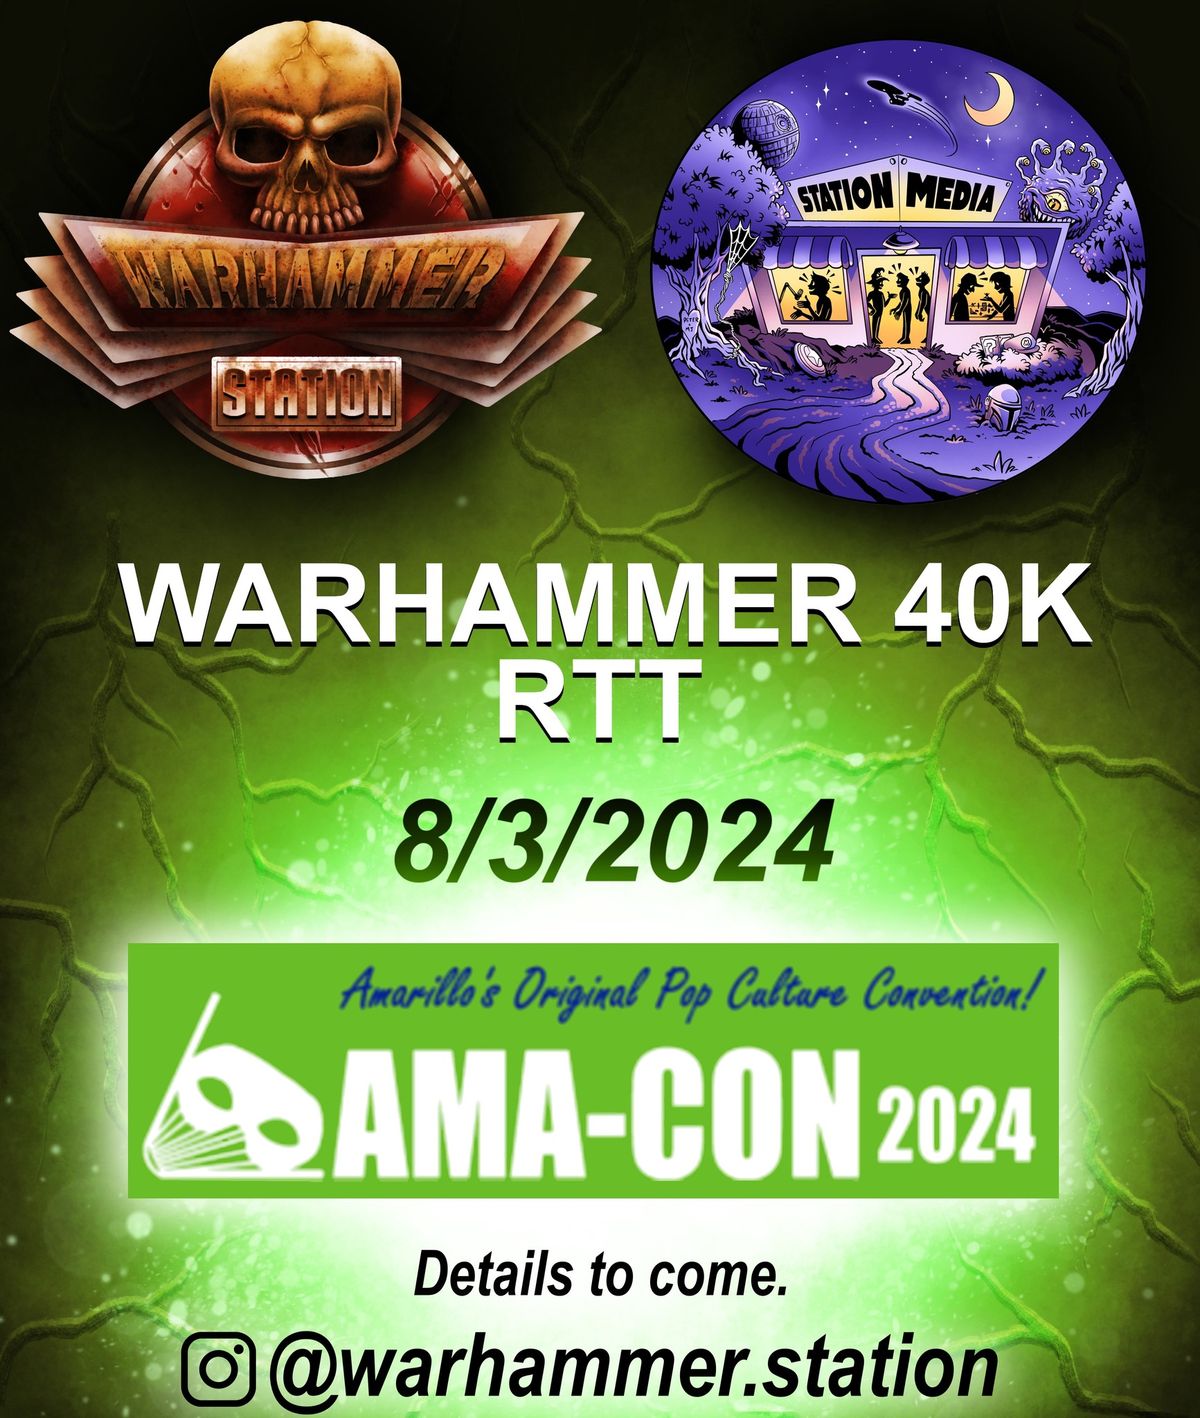 Warhammer 40K AMA-CON RTT